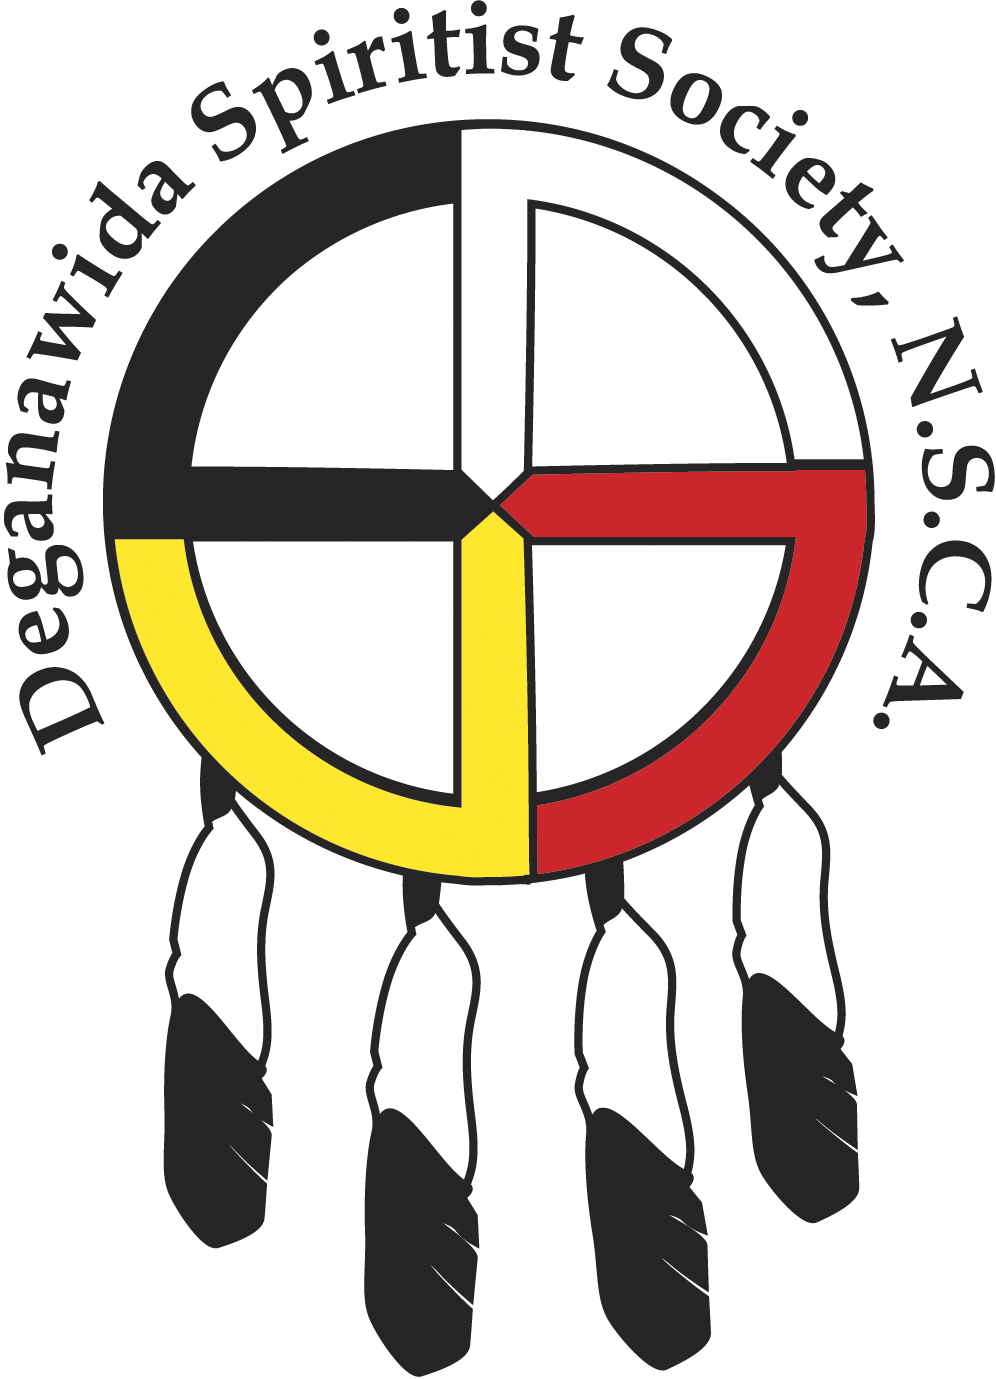 Deganawida spiritist society logos. Florida clipart seminole tribe